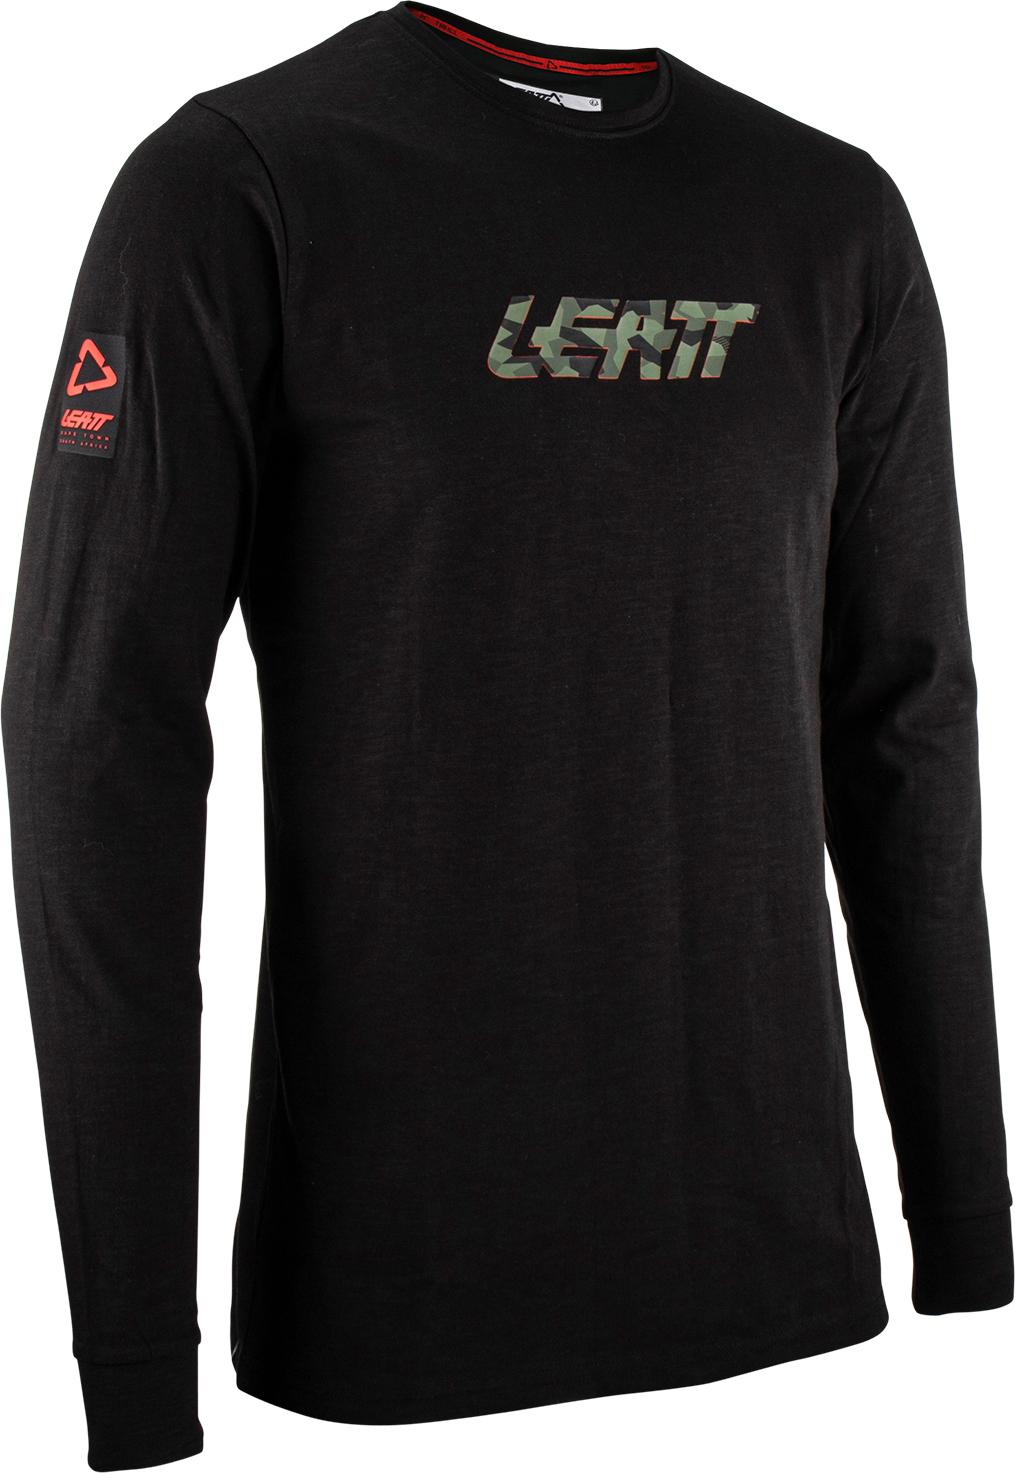 Leatt Camo Long Sleeve T-shirt  Black/camo